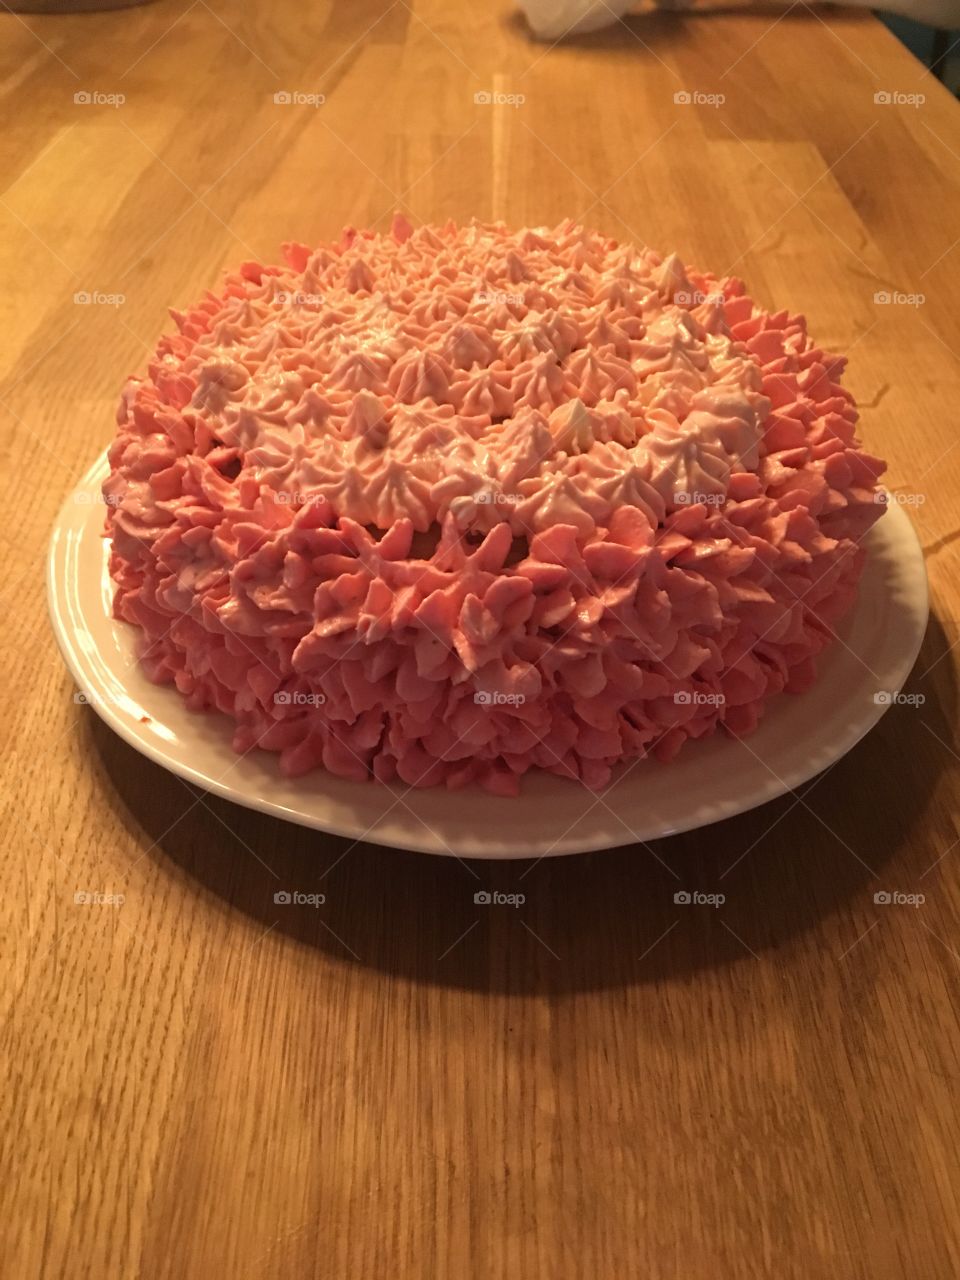 Pink ombré cake